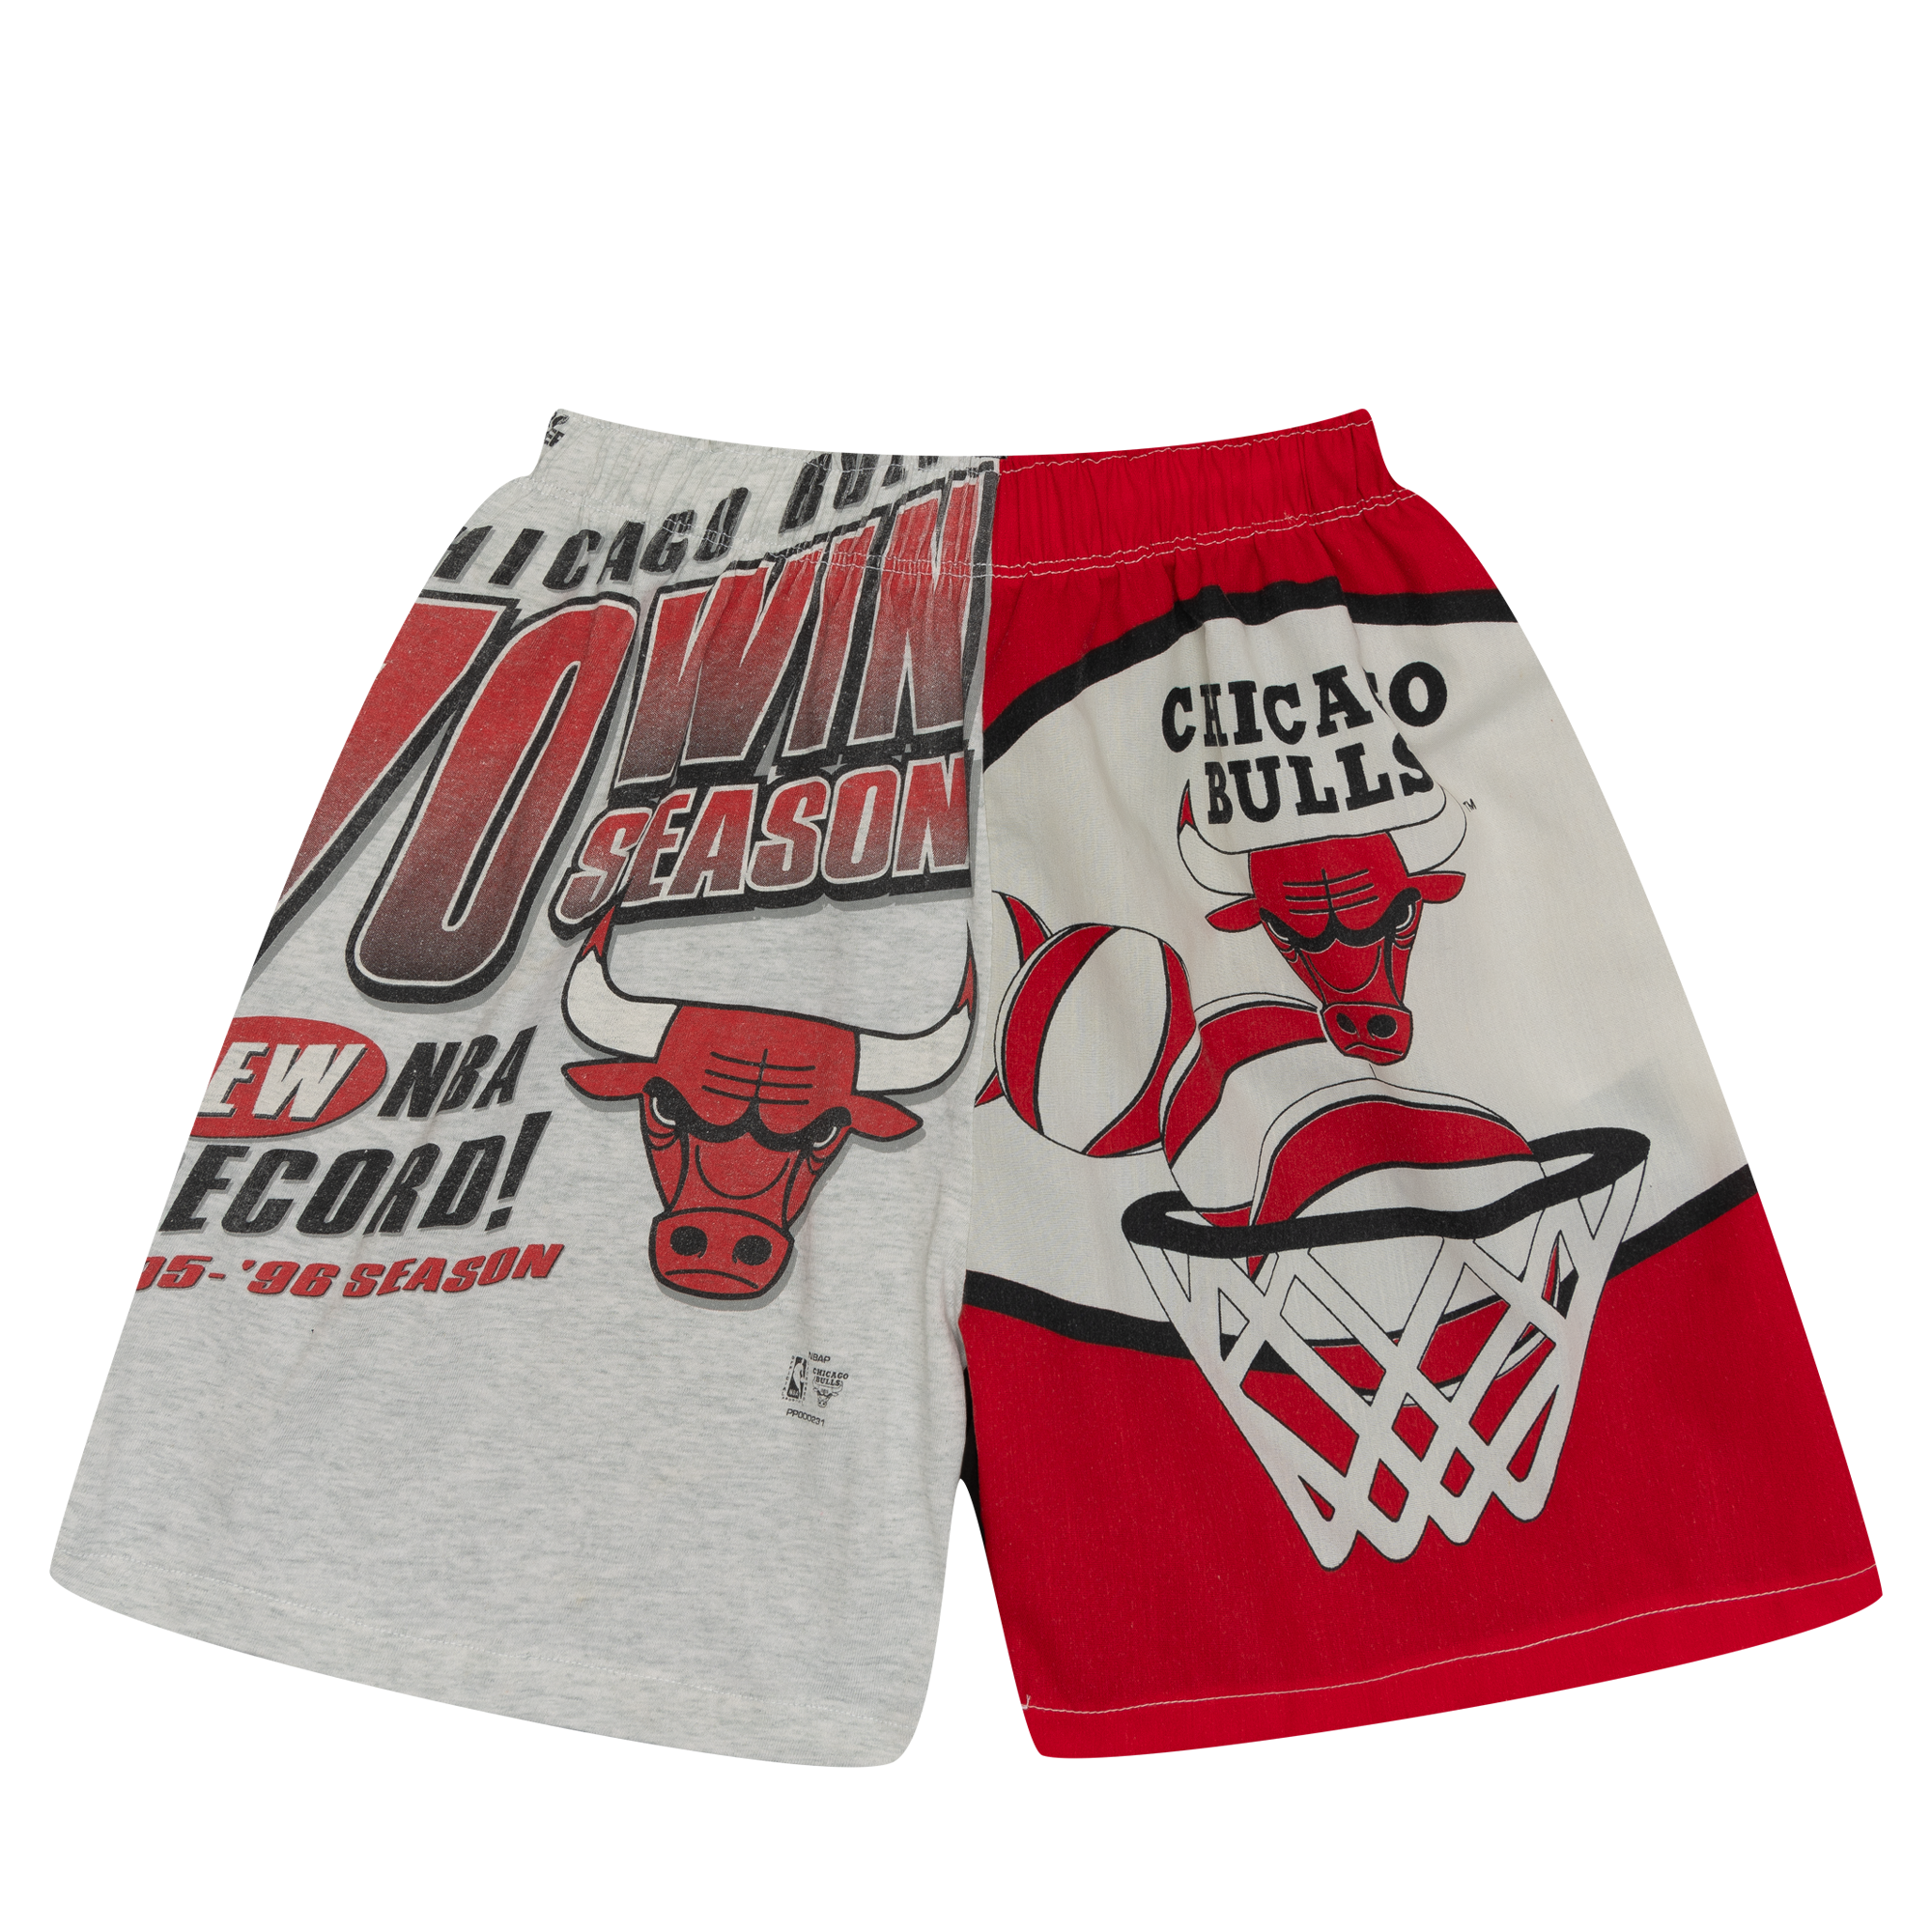 Plus Reworked Chicago Bulls 70 Win Season Shorts-PLUS